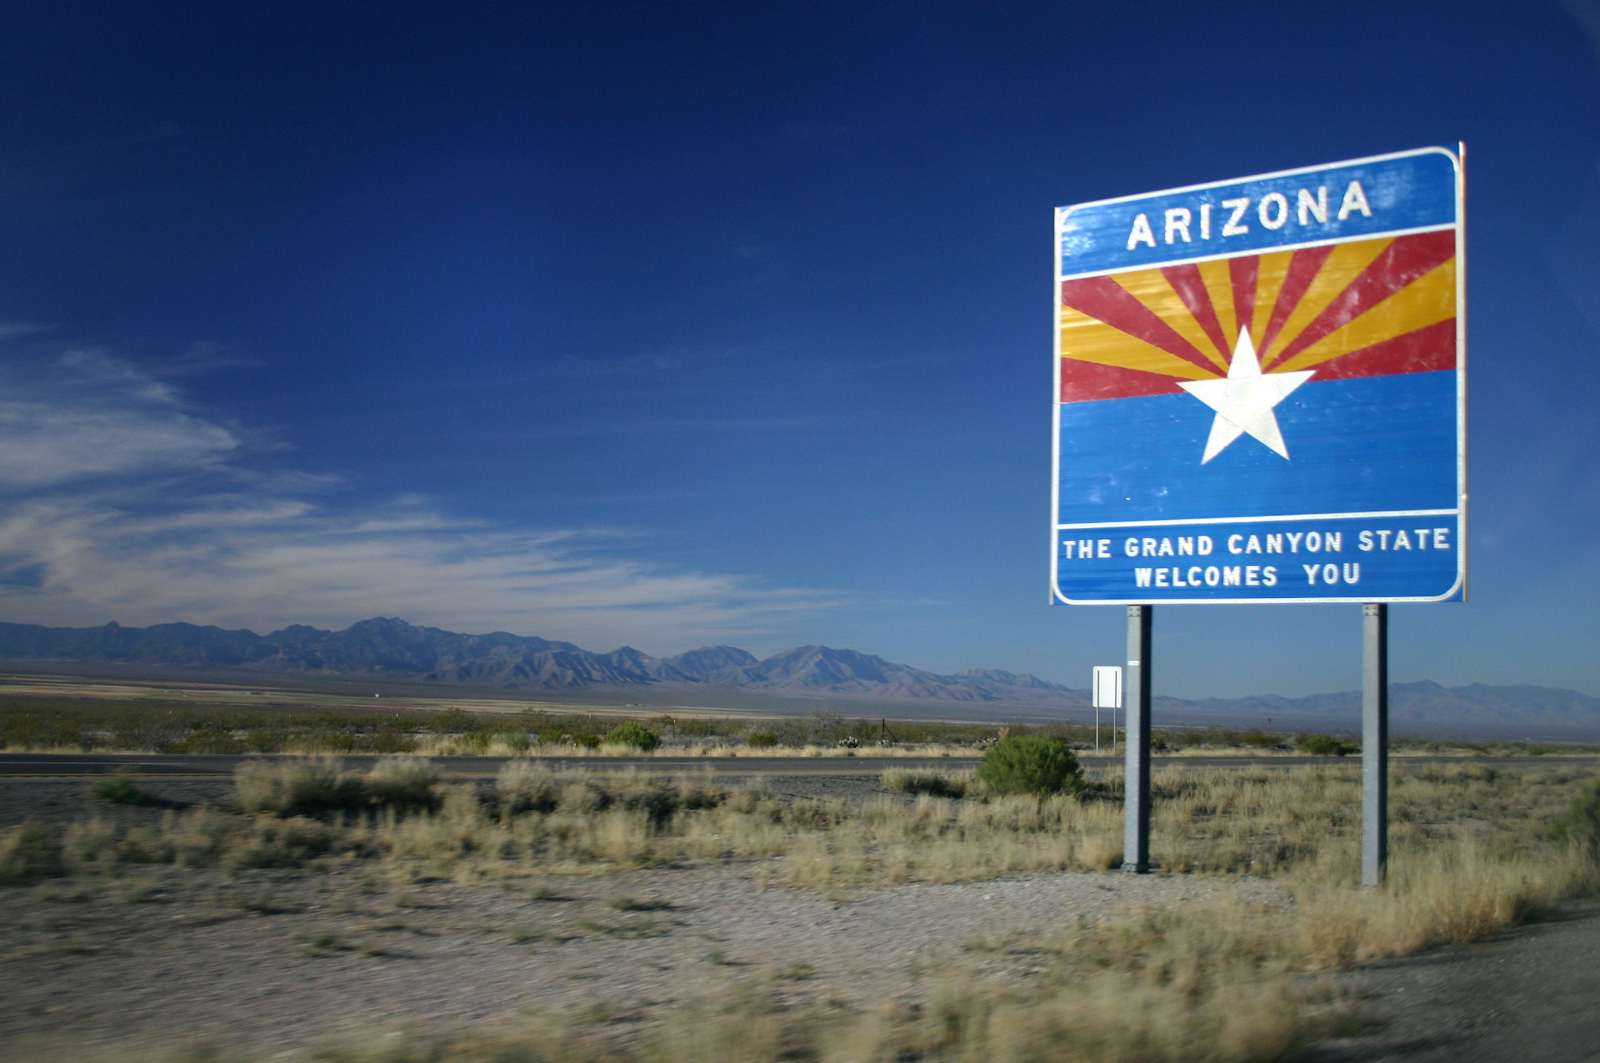 Entering Arizona highway sign